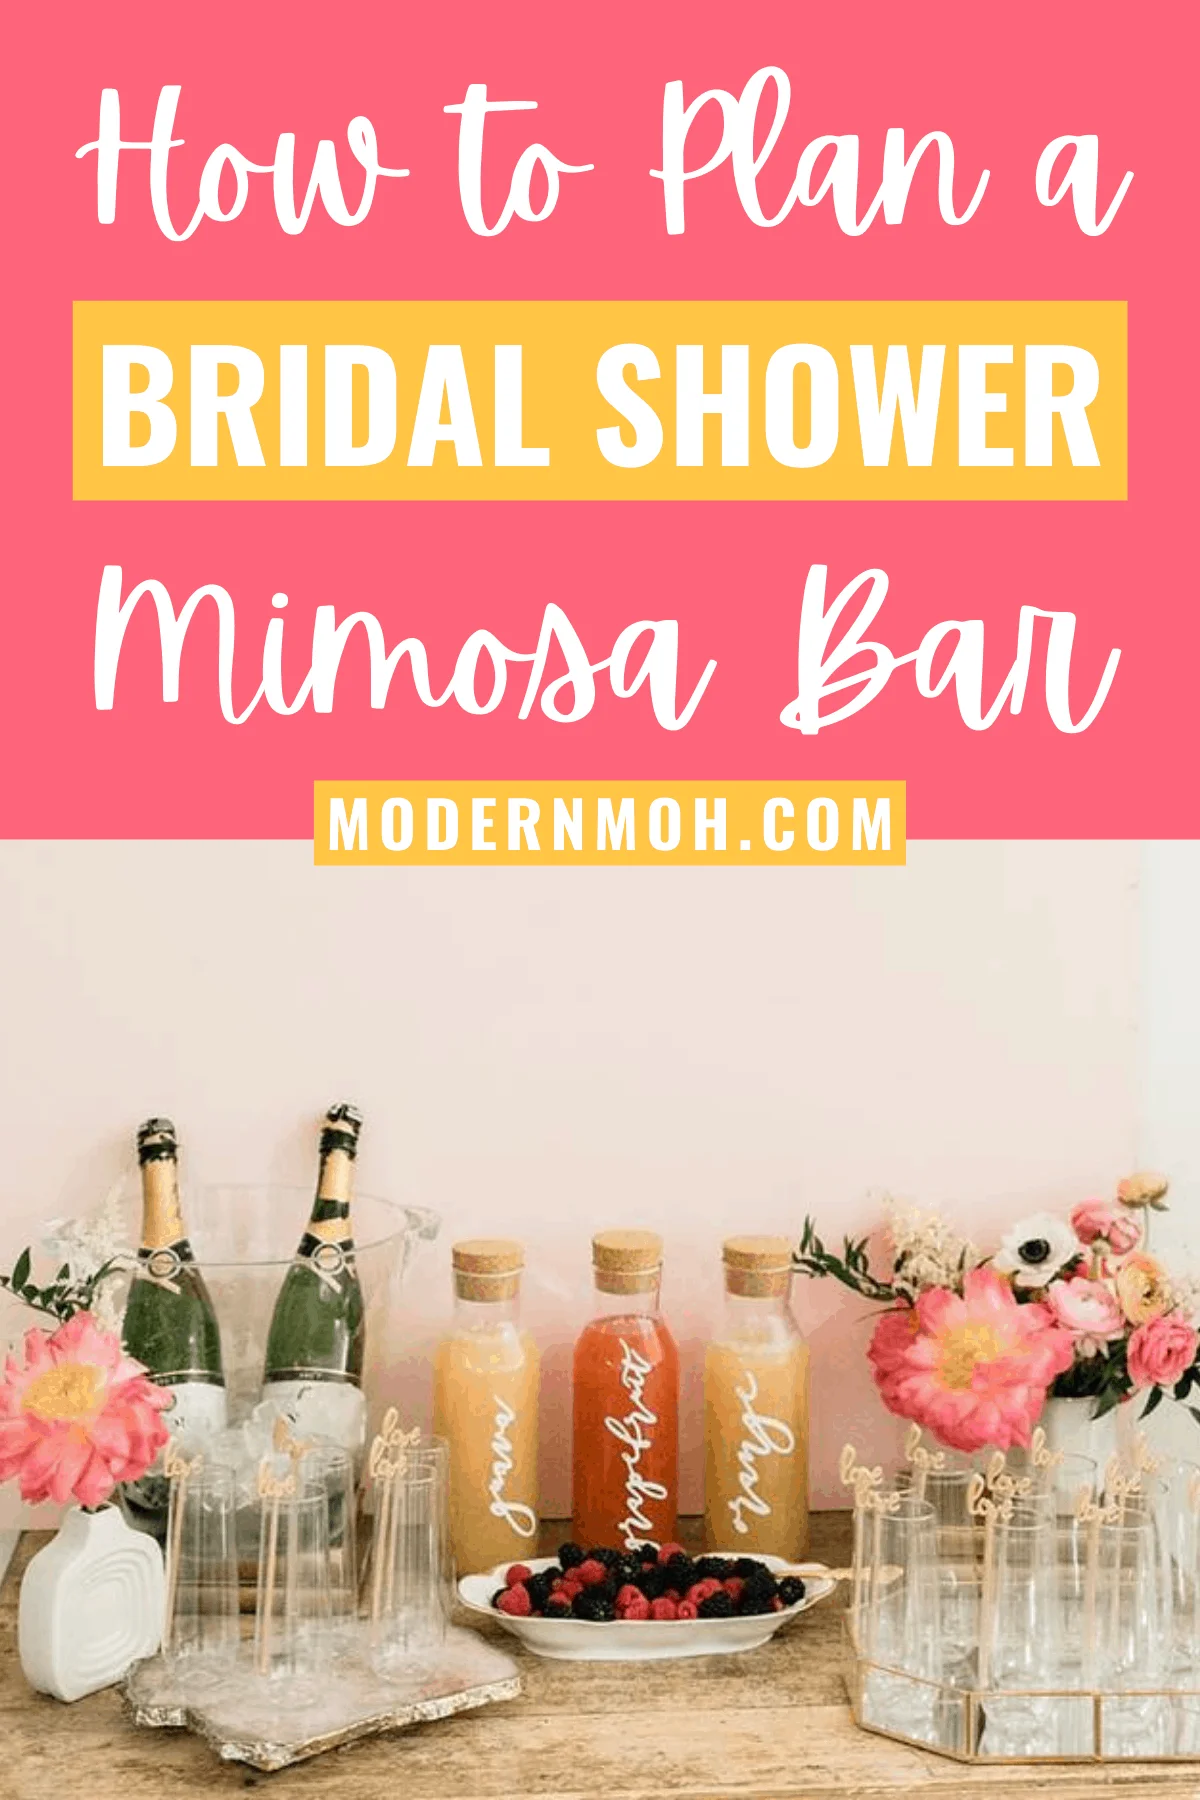 https://modernmoh.com/wp-content/uploads/2020/11/mimosa-bar-bridal-shower.png.webp